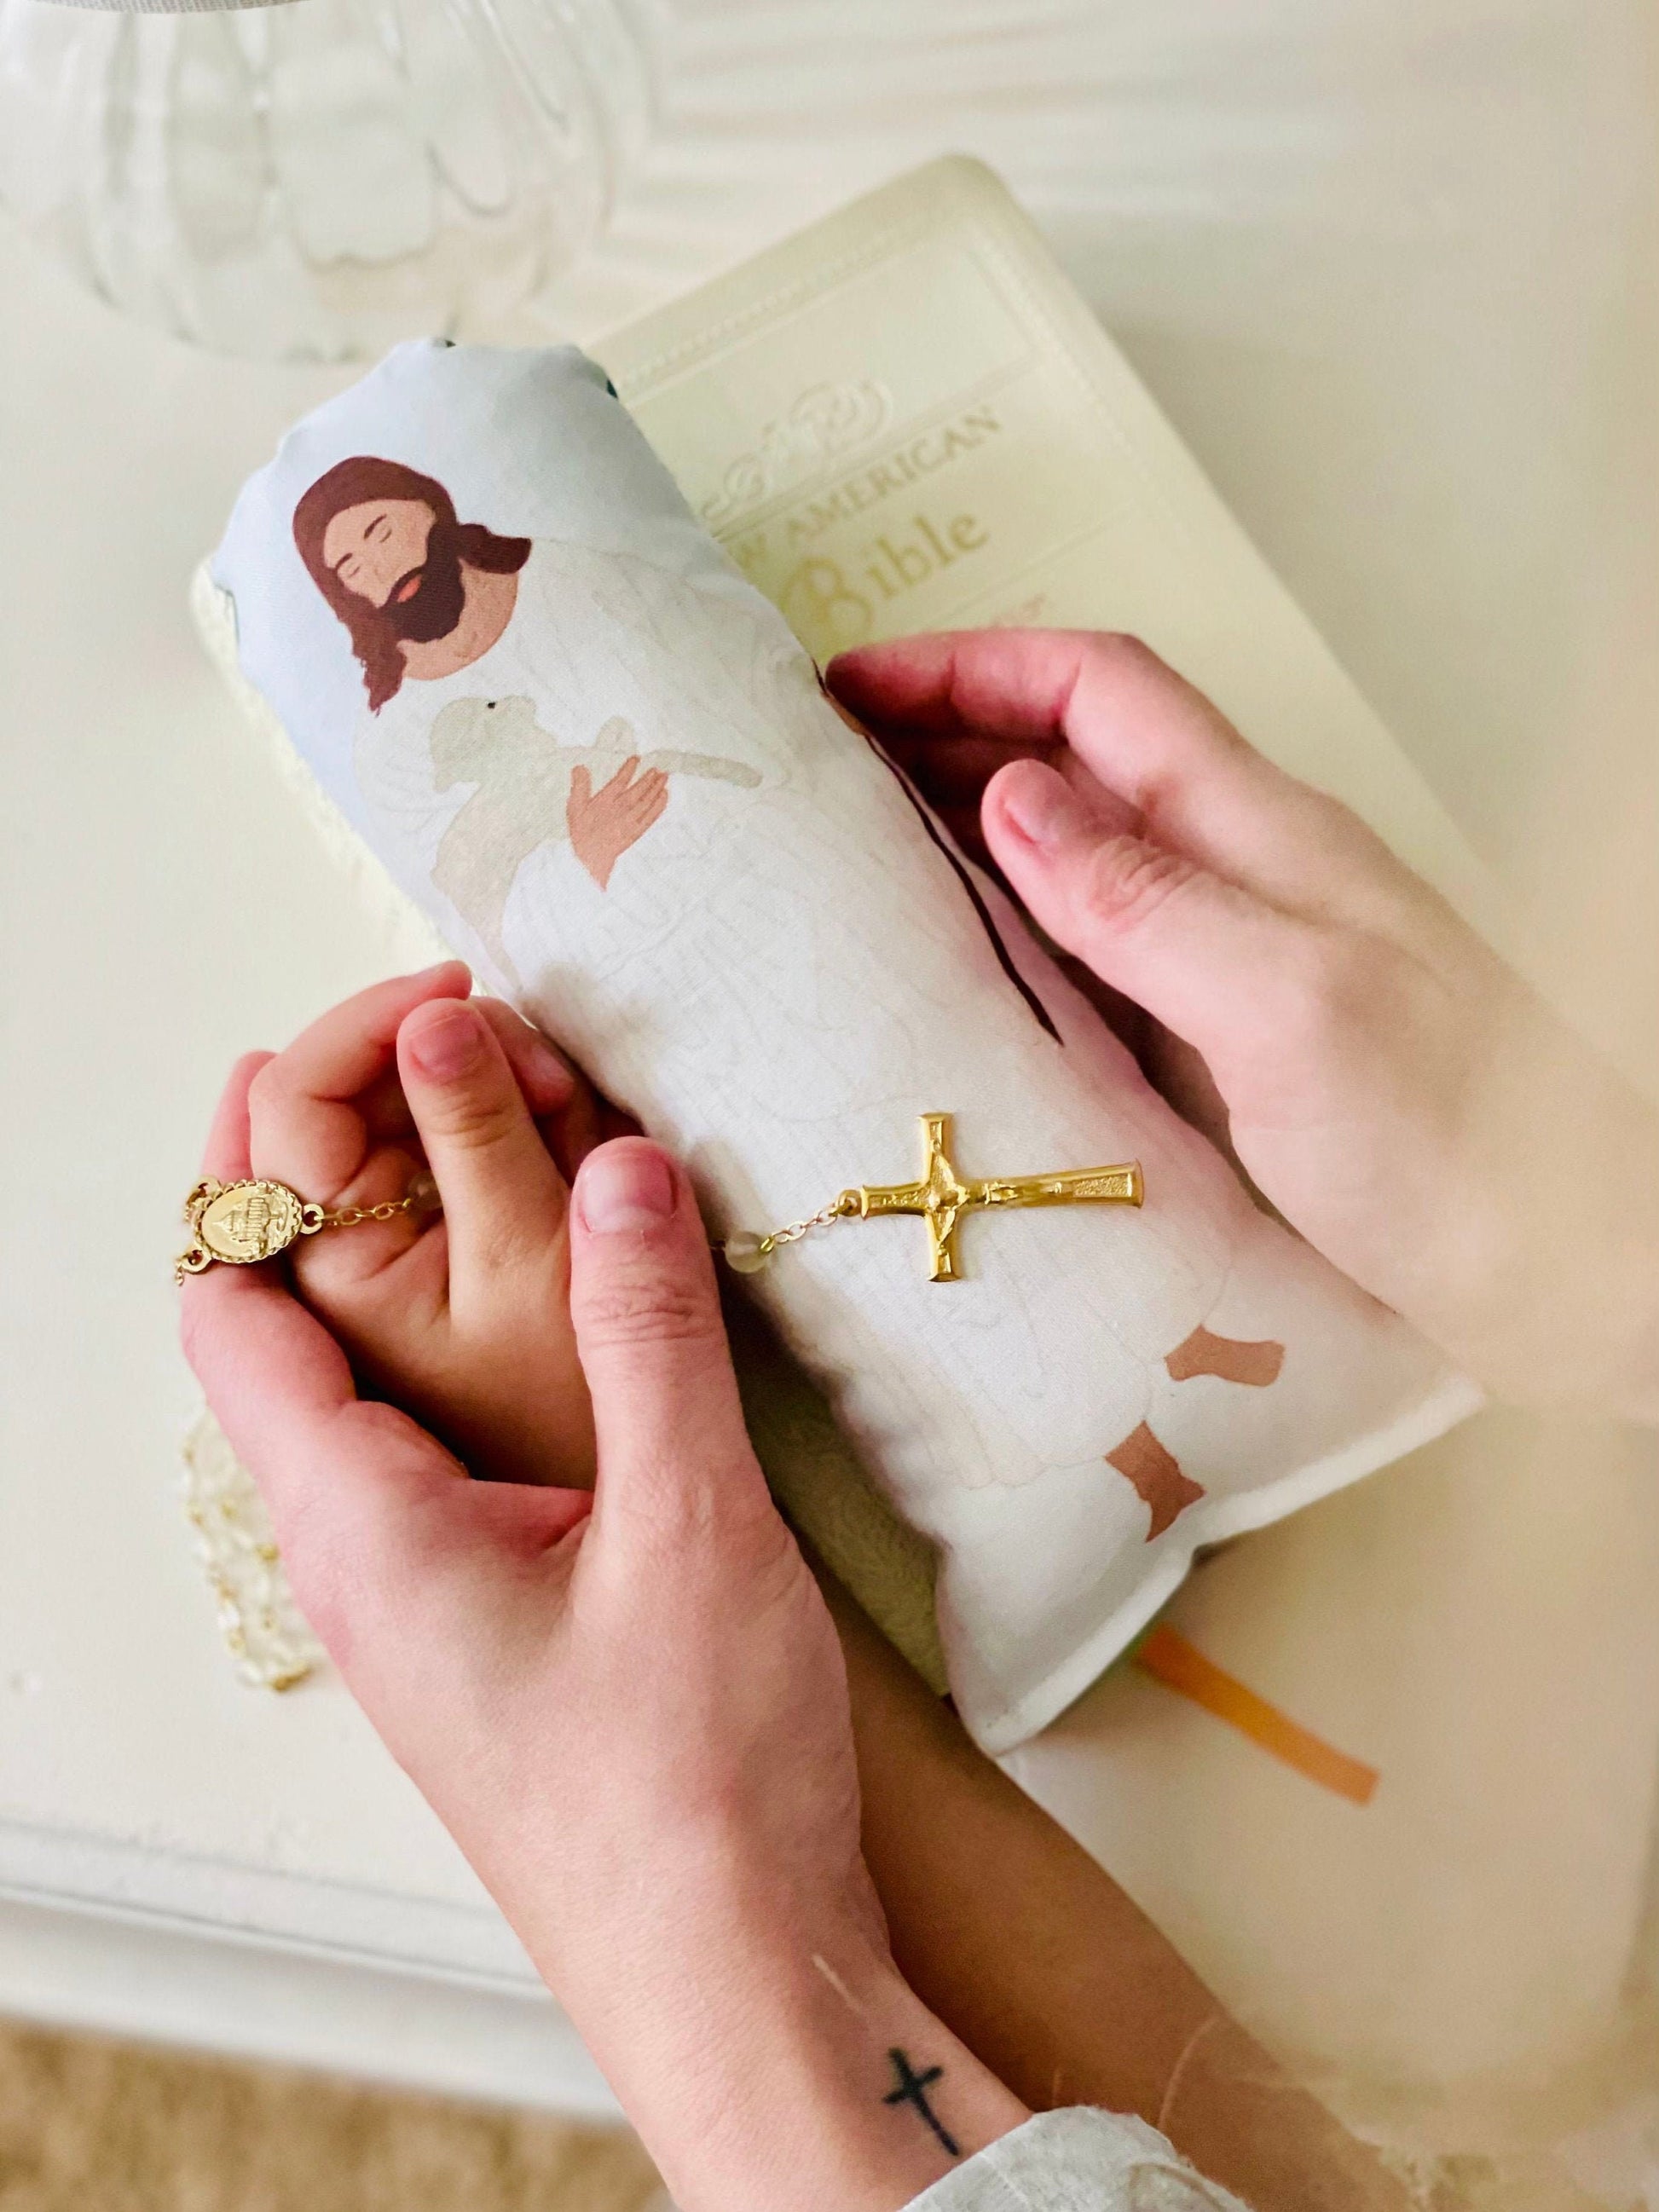 comforting jesus prayer doll